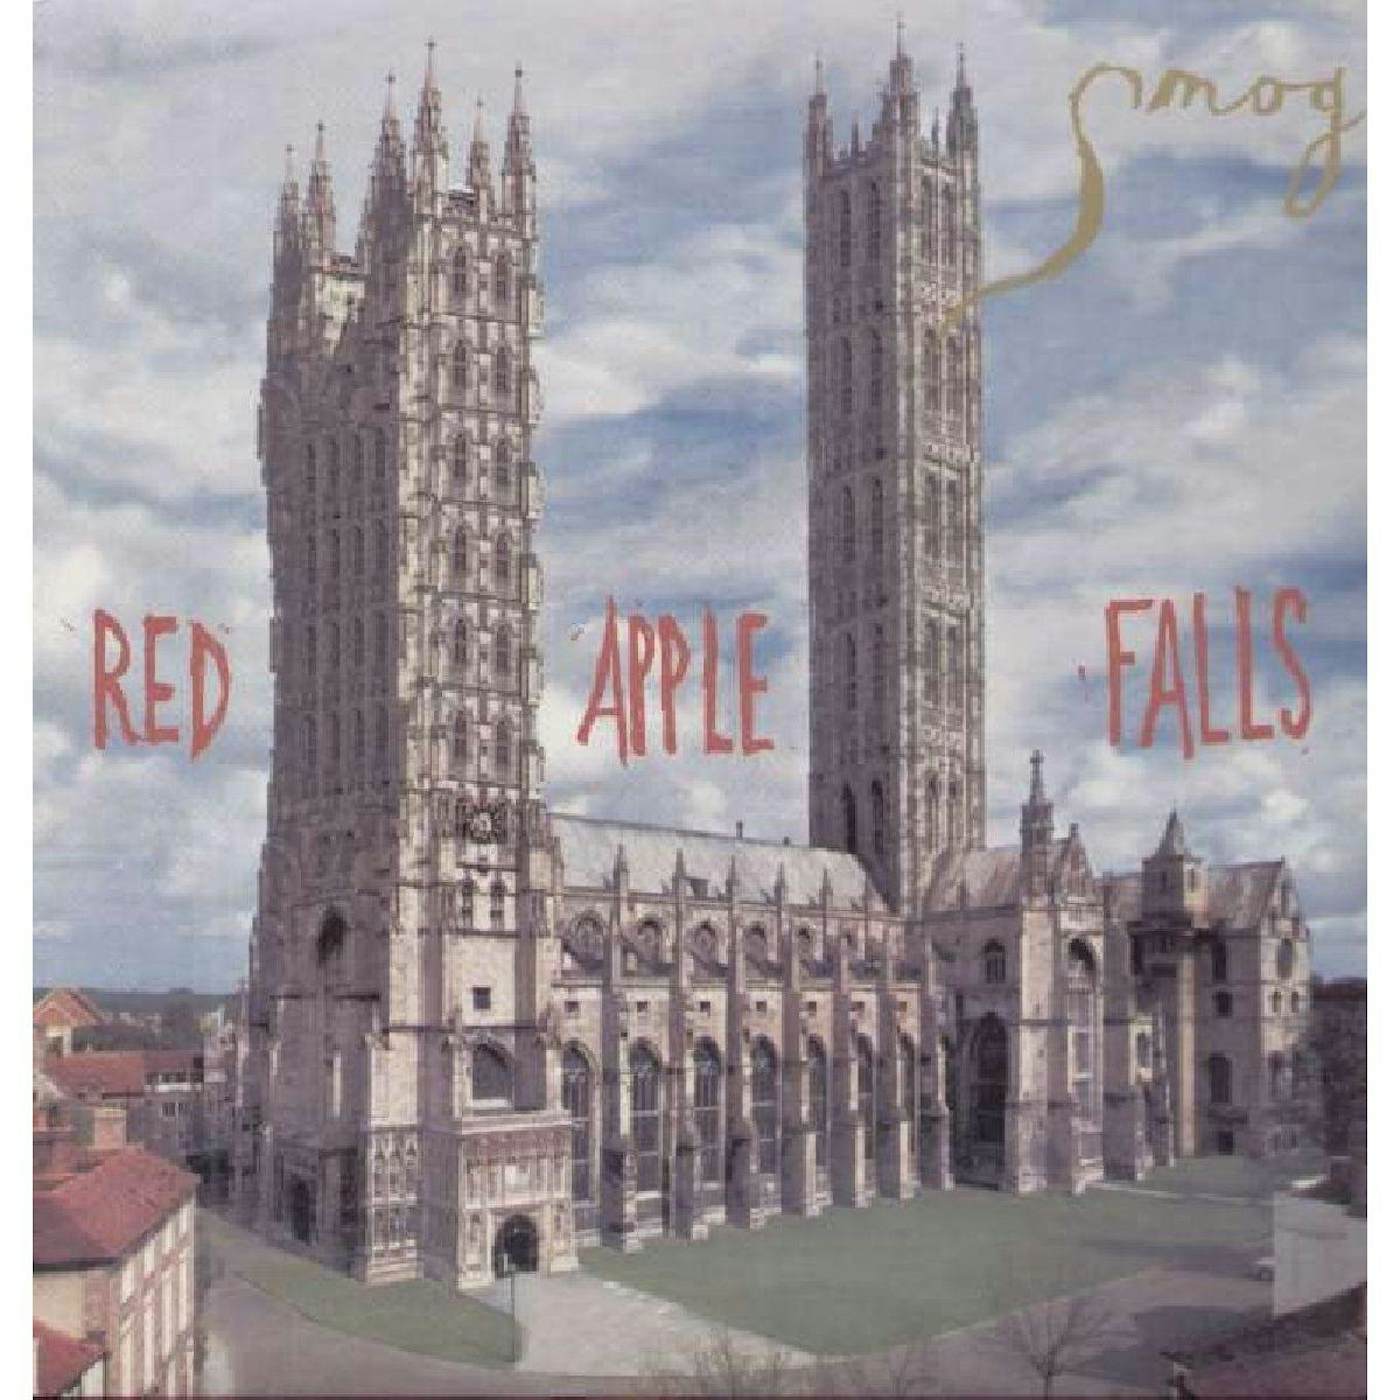 Smog Red Apple Falls Vinyl Record